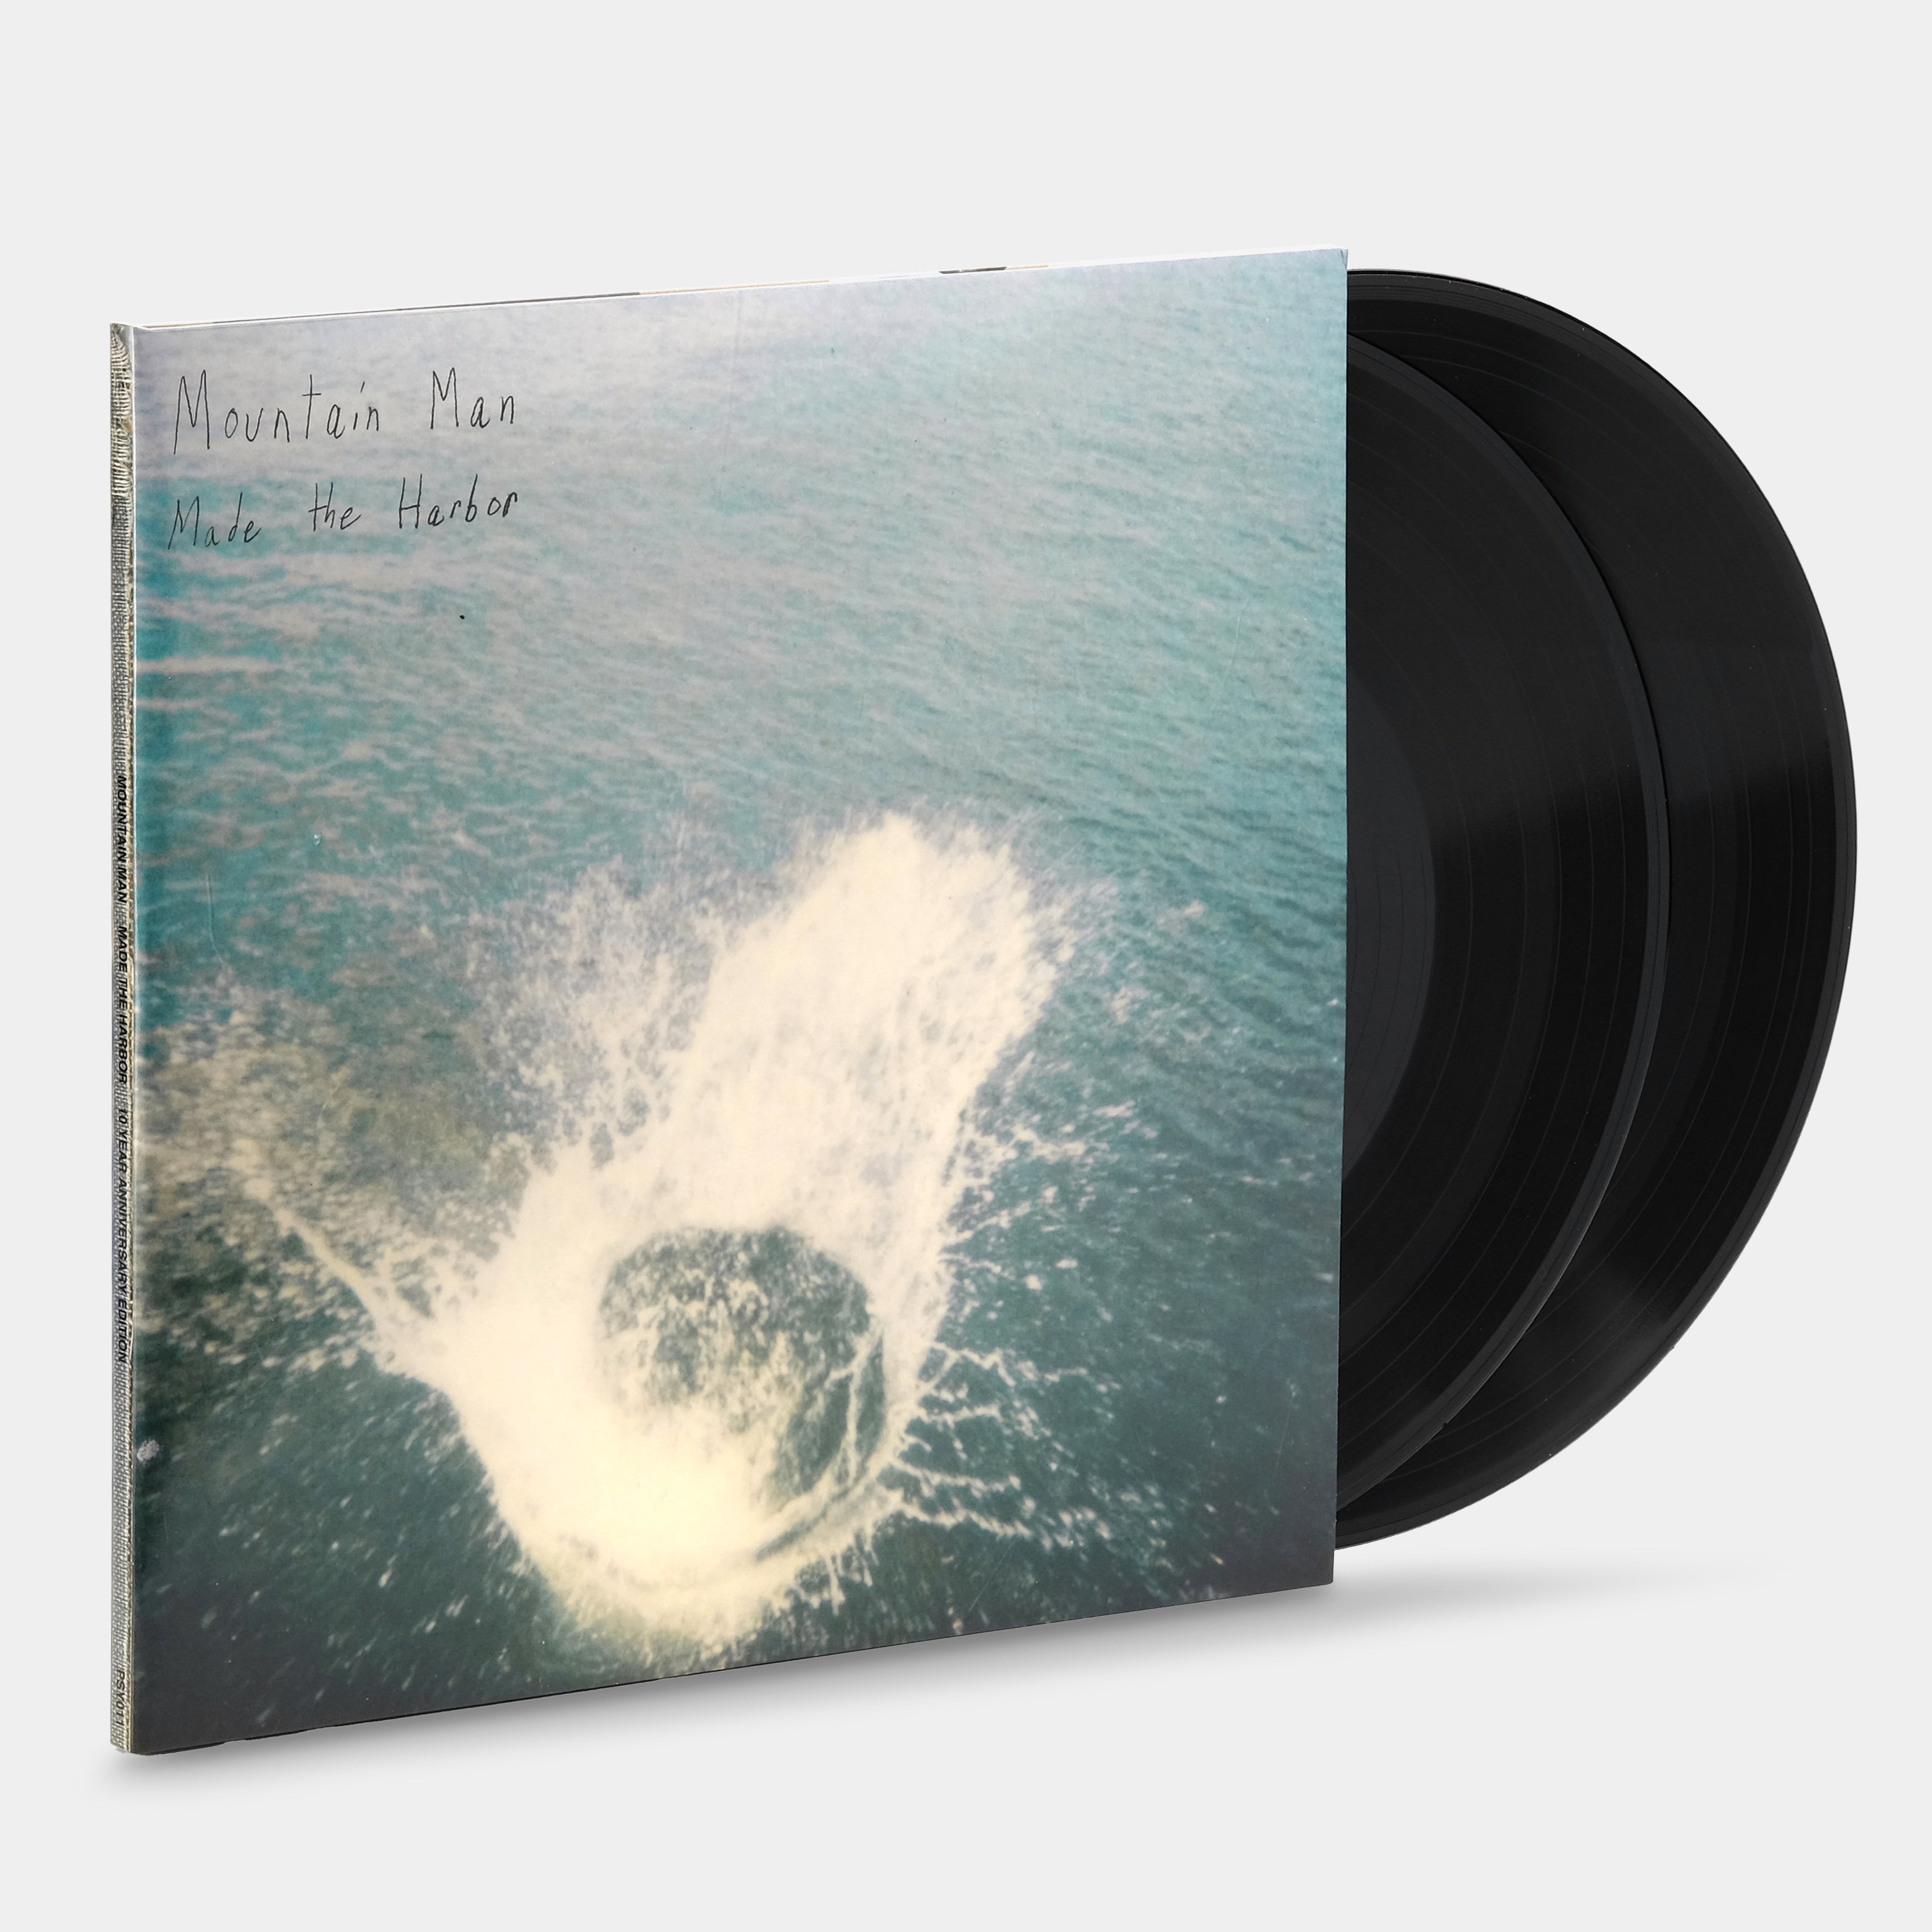 Mountain Man - Made The Harbor (10 Year Anniversary Edition) 2xLP Vinyl Record